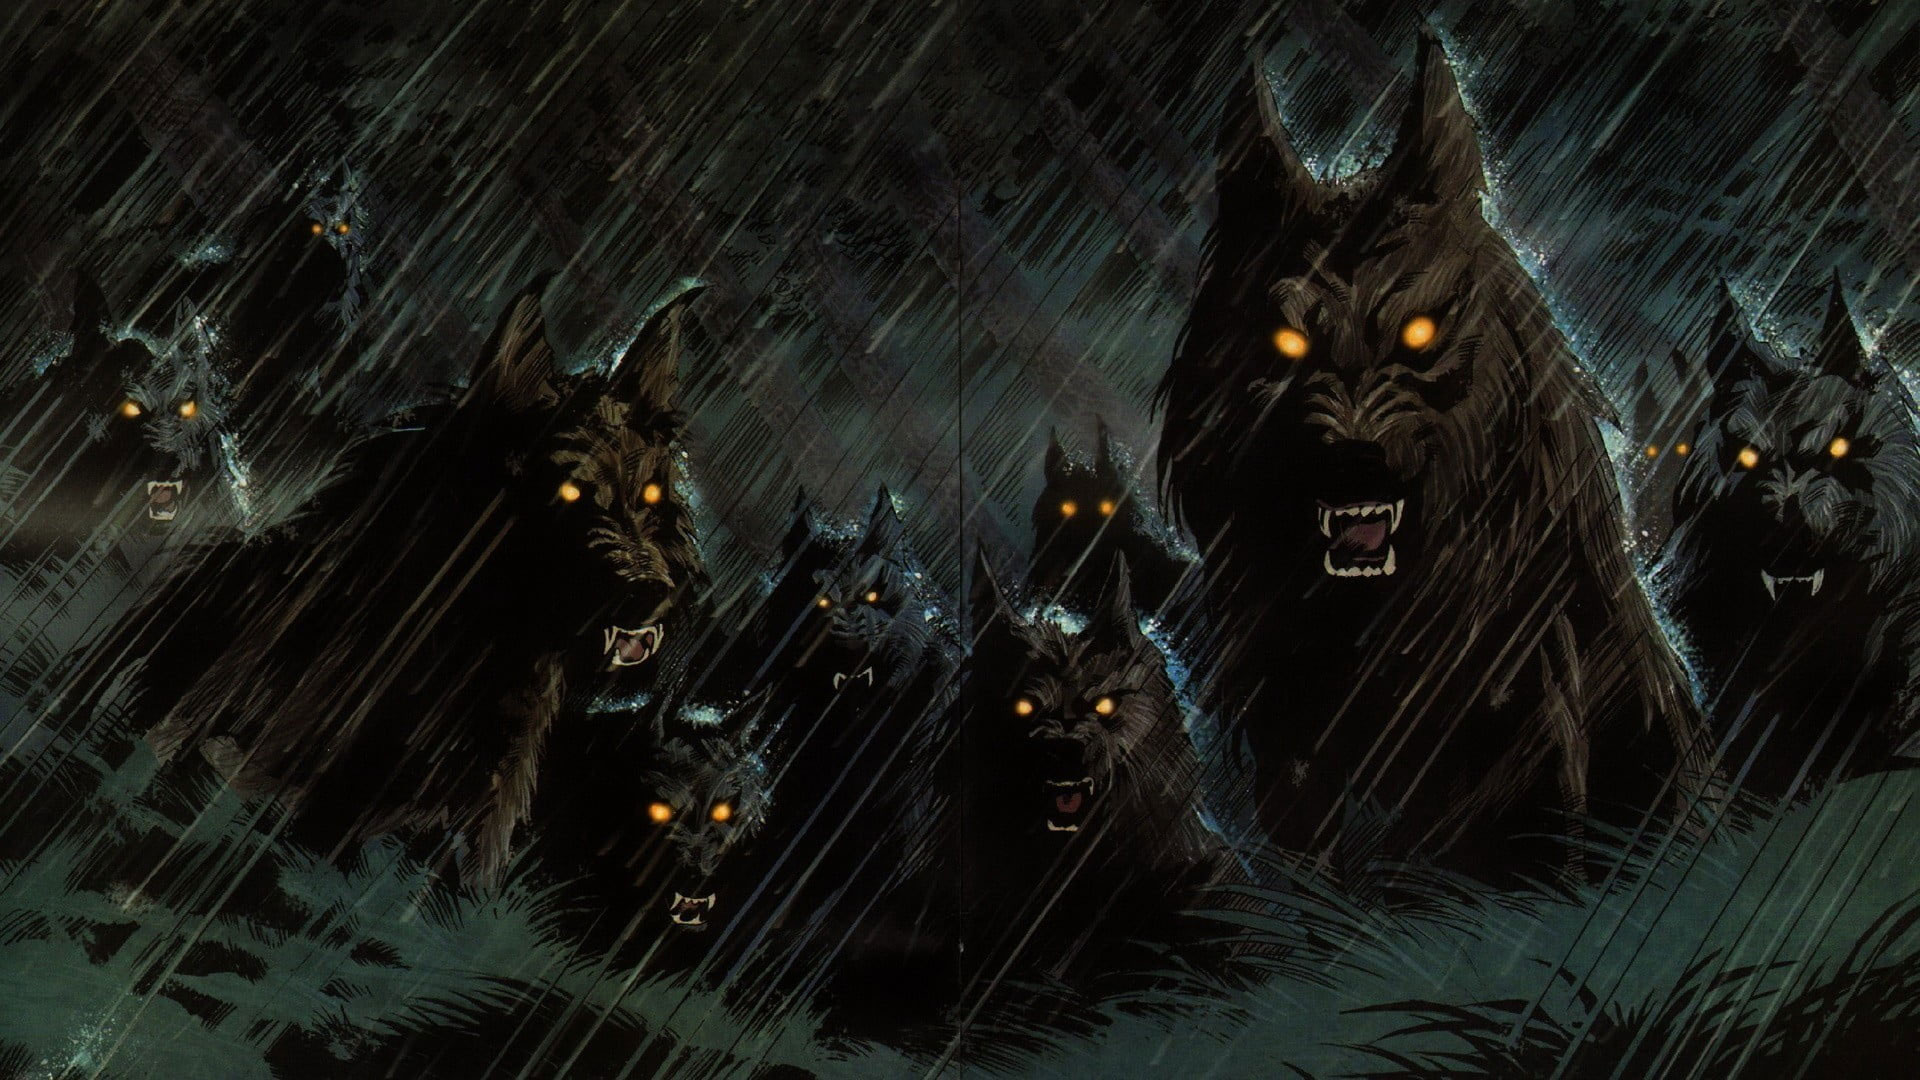 Group of wolves wallpaper, fantasy art, artwork, wolf, dog, night